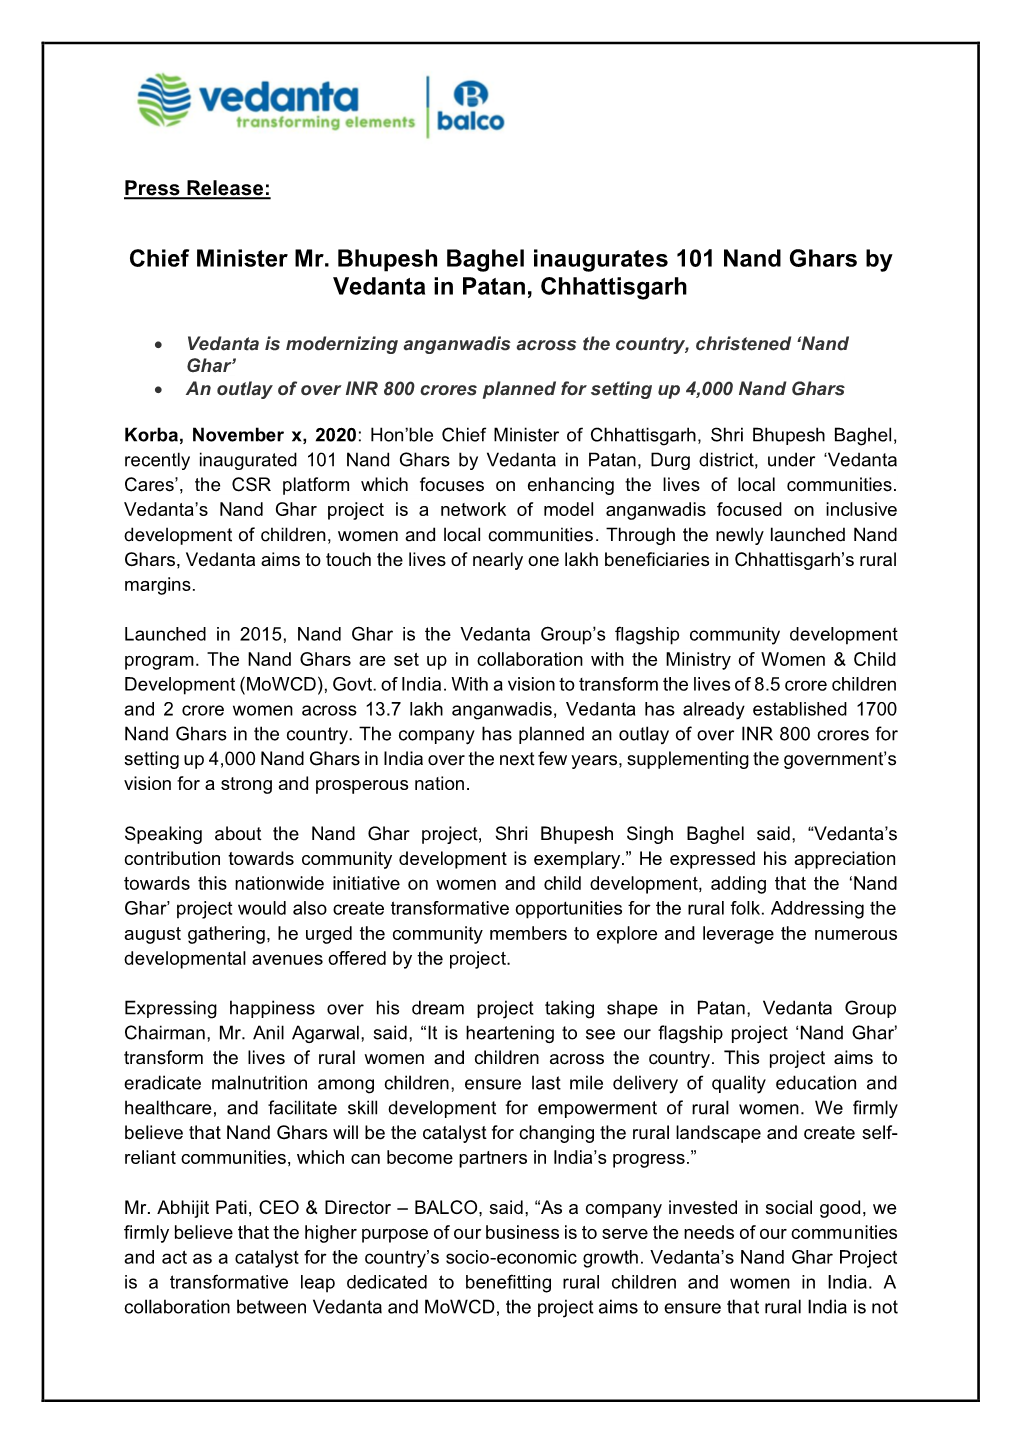 Chief Minister Mr. Bhupesh Baghel Inaugurates 101 Nand Ghars by Vedanta in Patan, Chhattisgarh